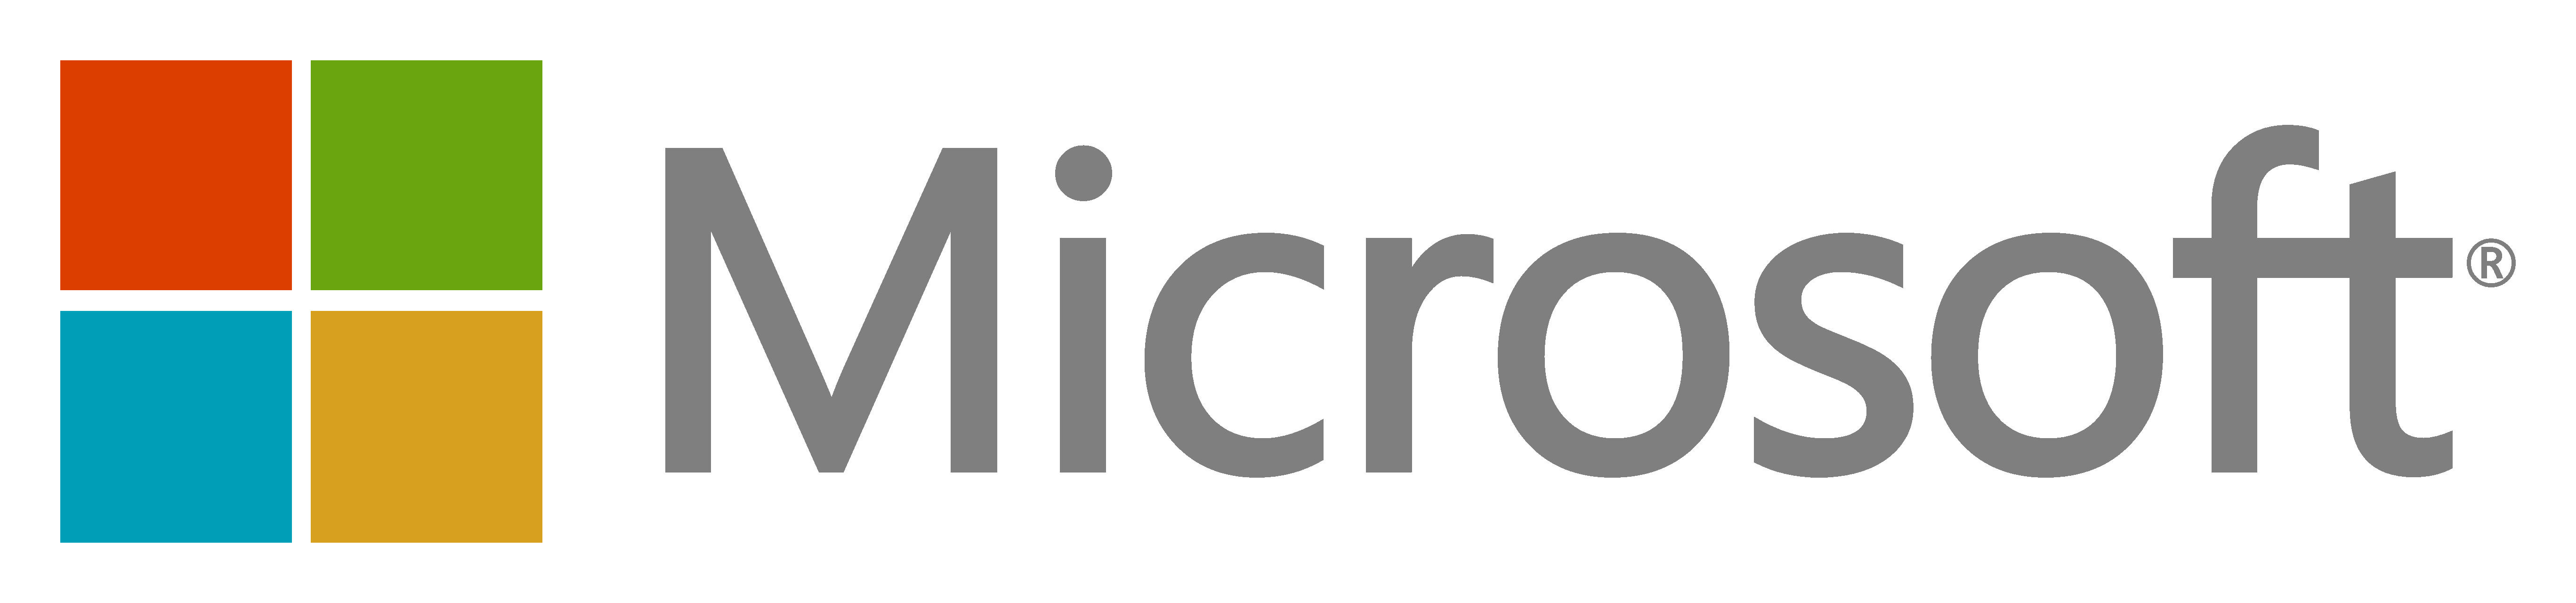 microsoft logo png transparent background #2396